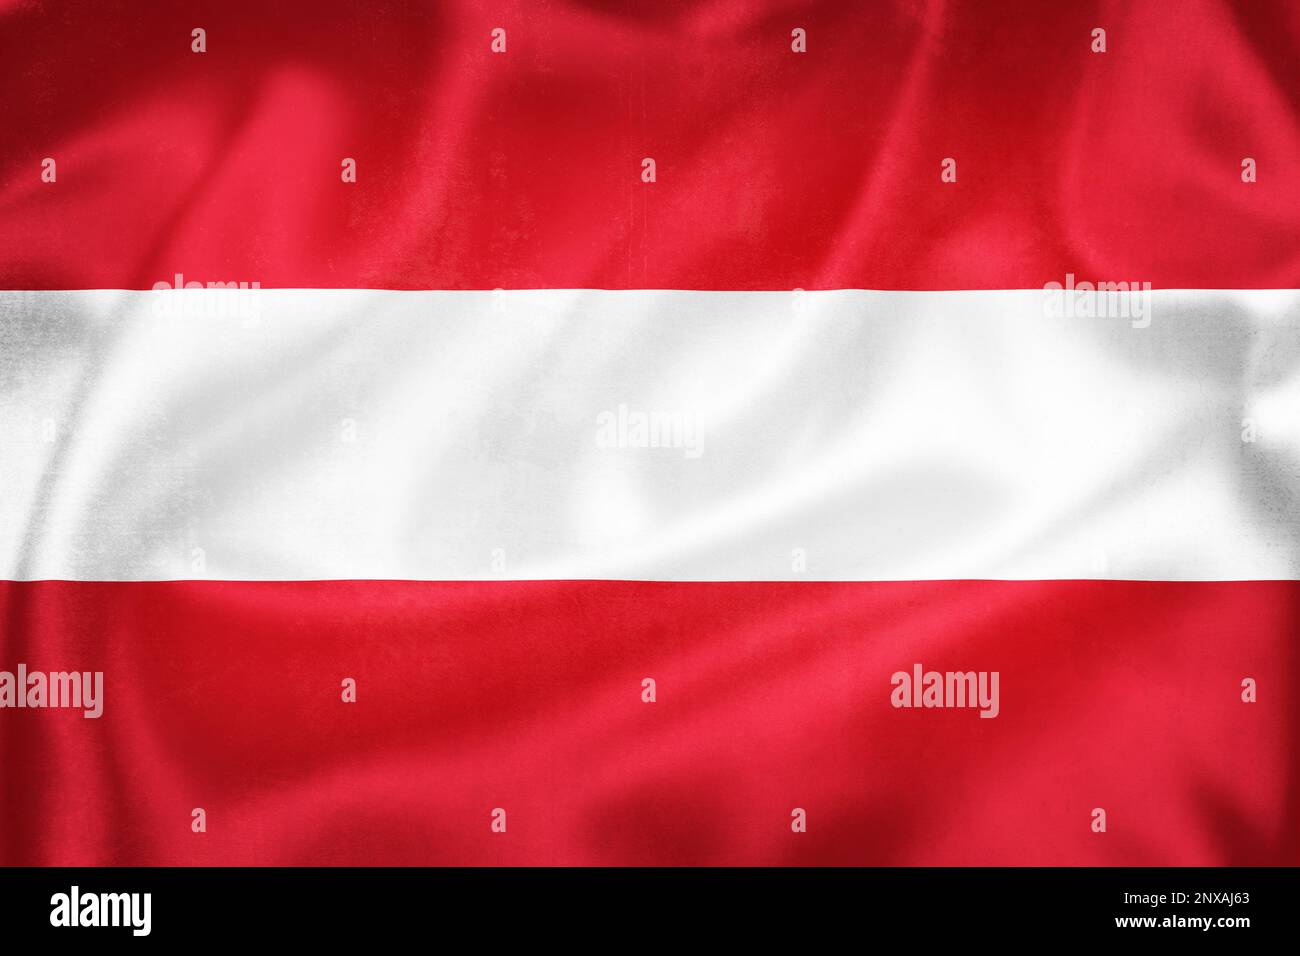 Grunge 3D illustration of Austria flag, concept of Austria Stock Photo